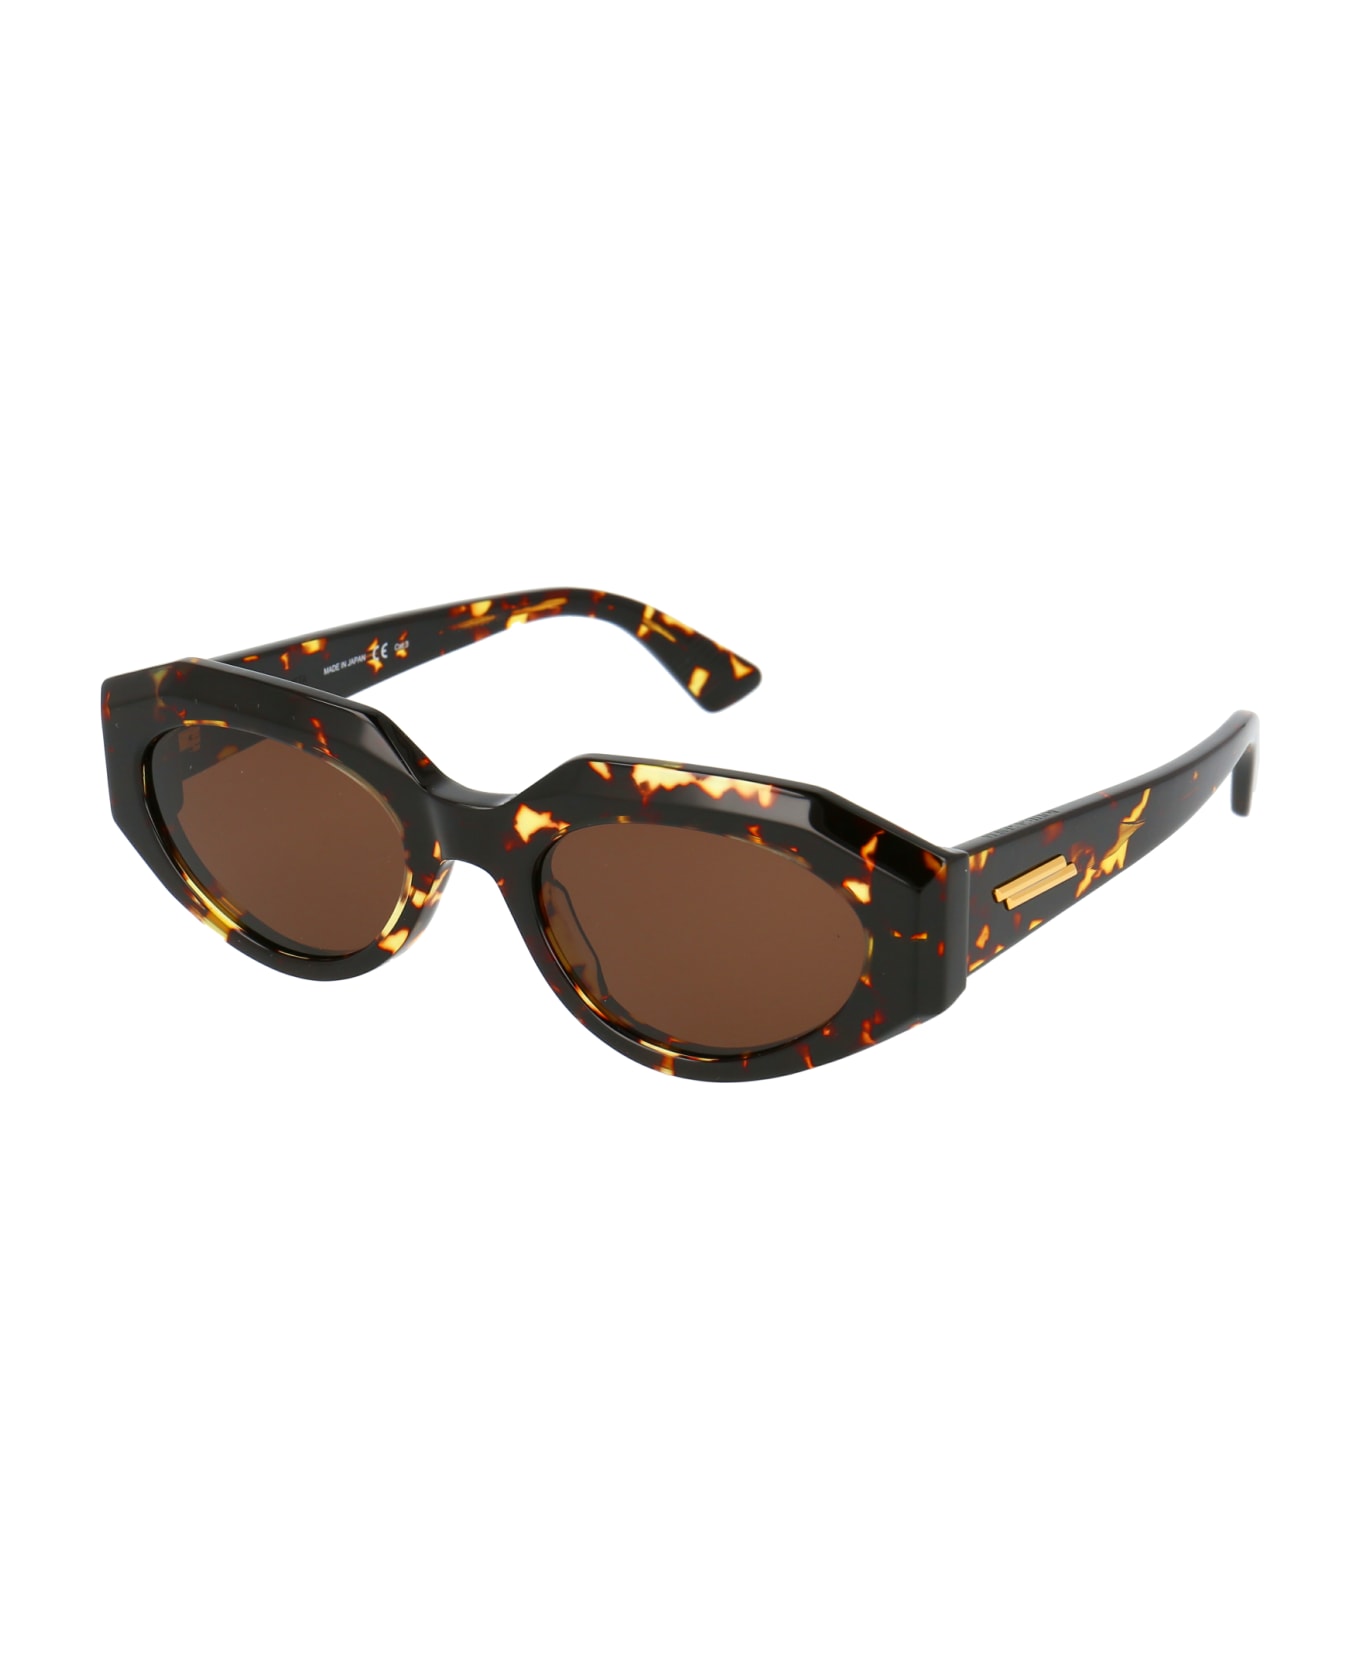 Bottega Veneta Eyewear Bv1031s Sunglasses - 002 HAVANA HAVANA BROWN サングラス